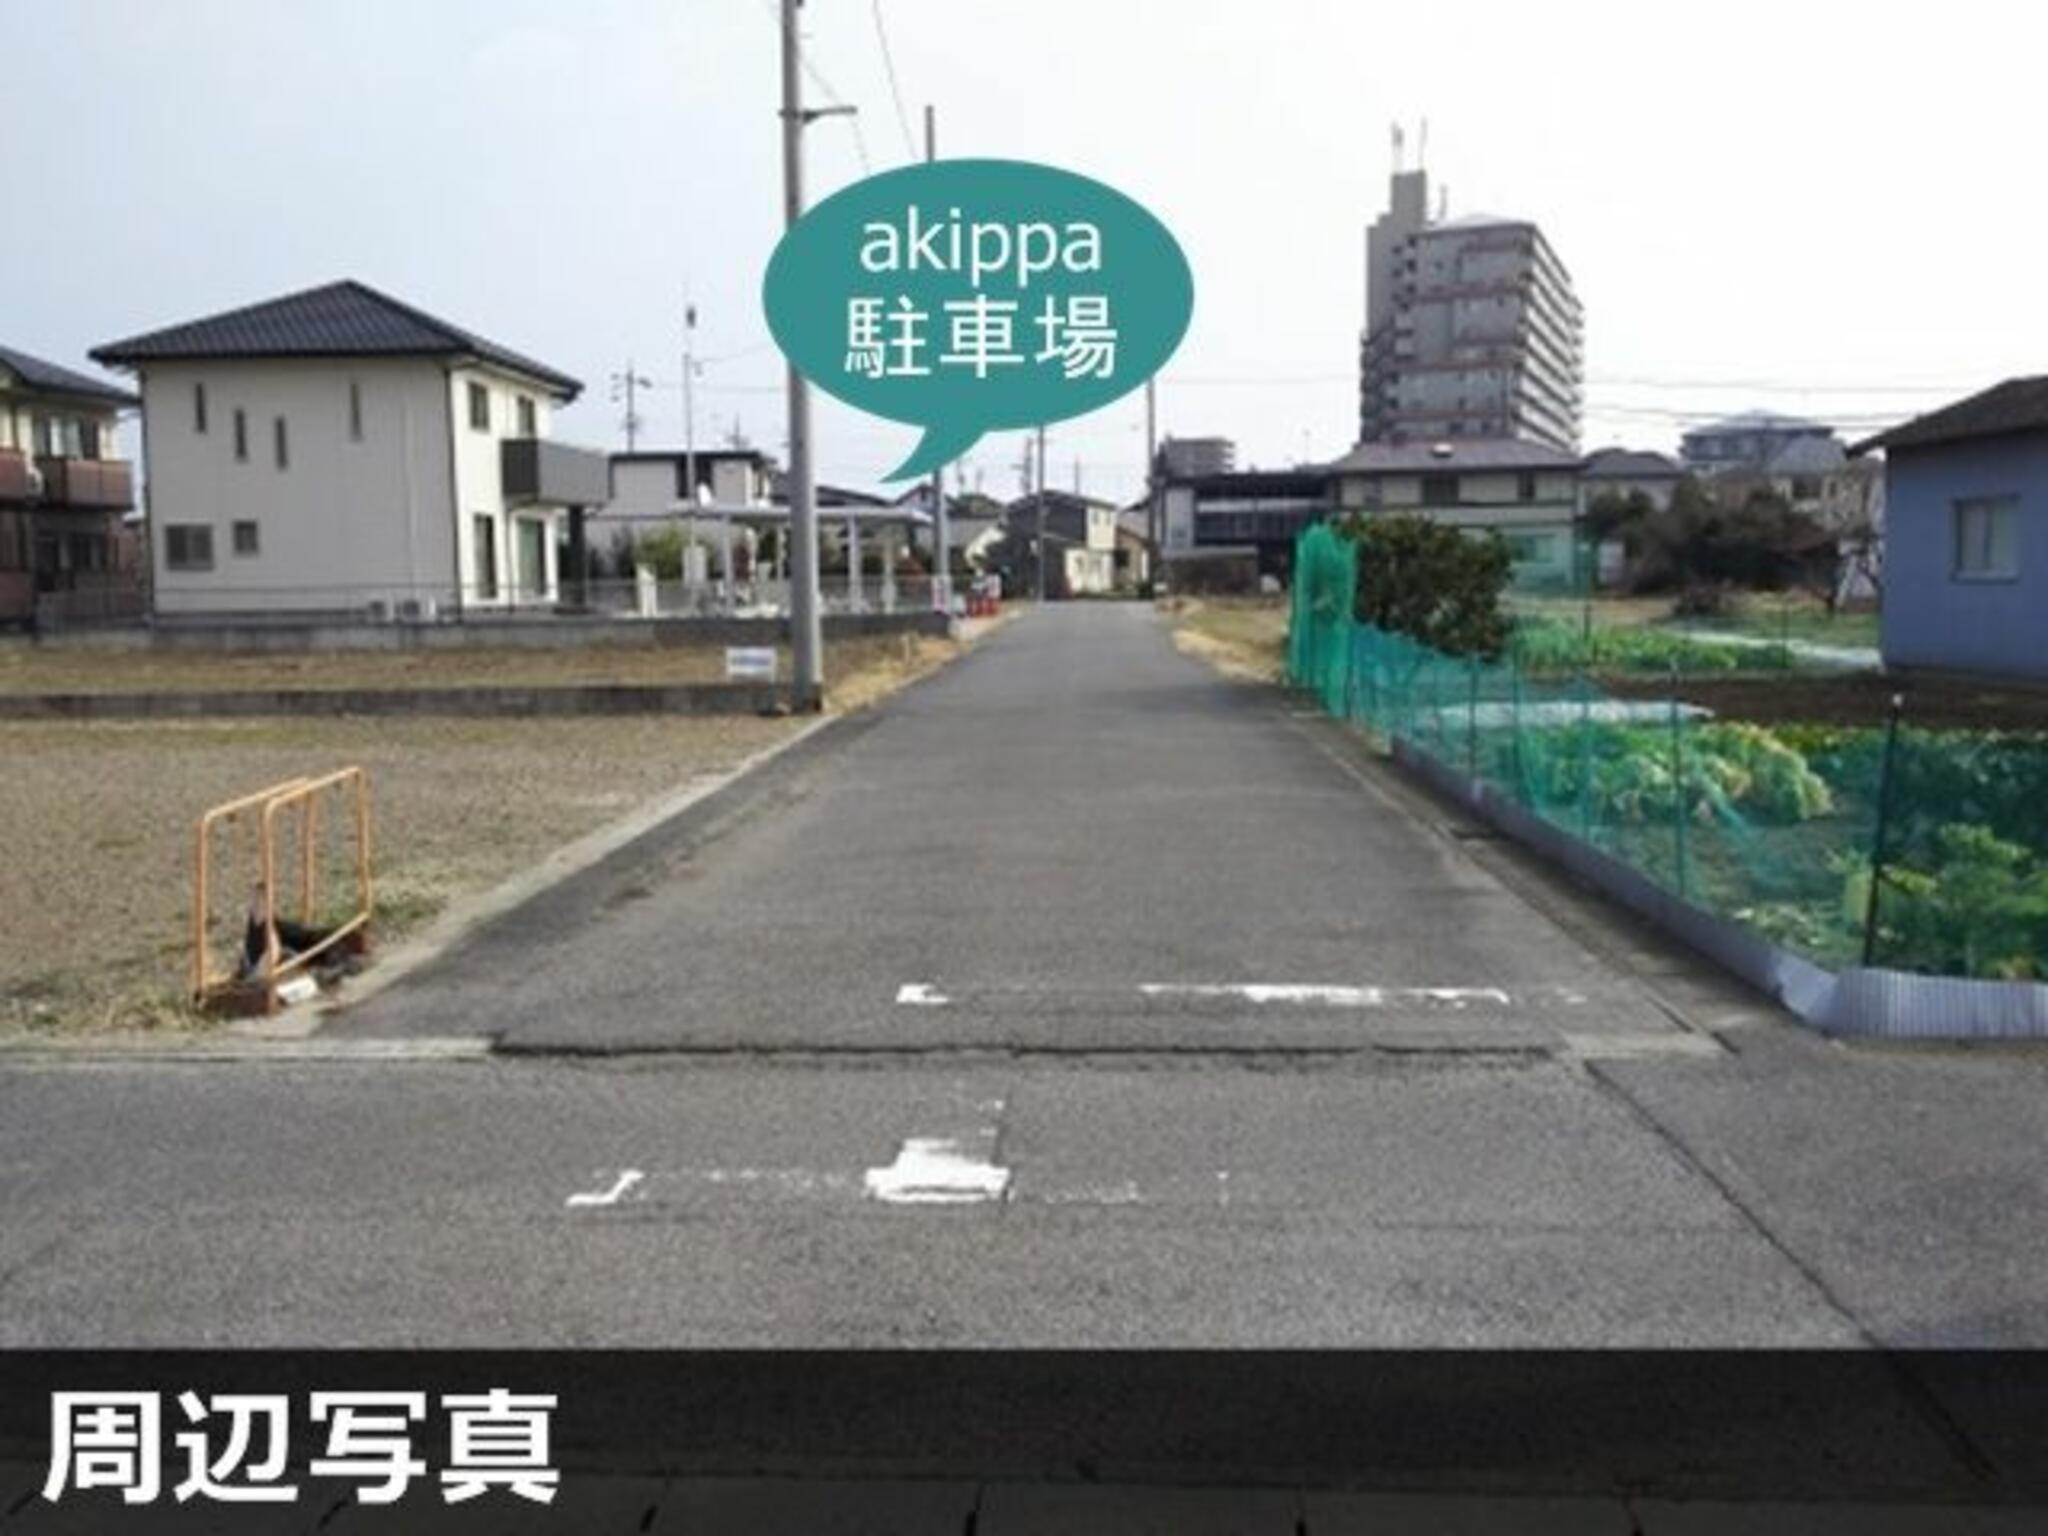 akippa駐車場:愛知県江南市五明町天王149の代表写真4